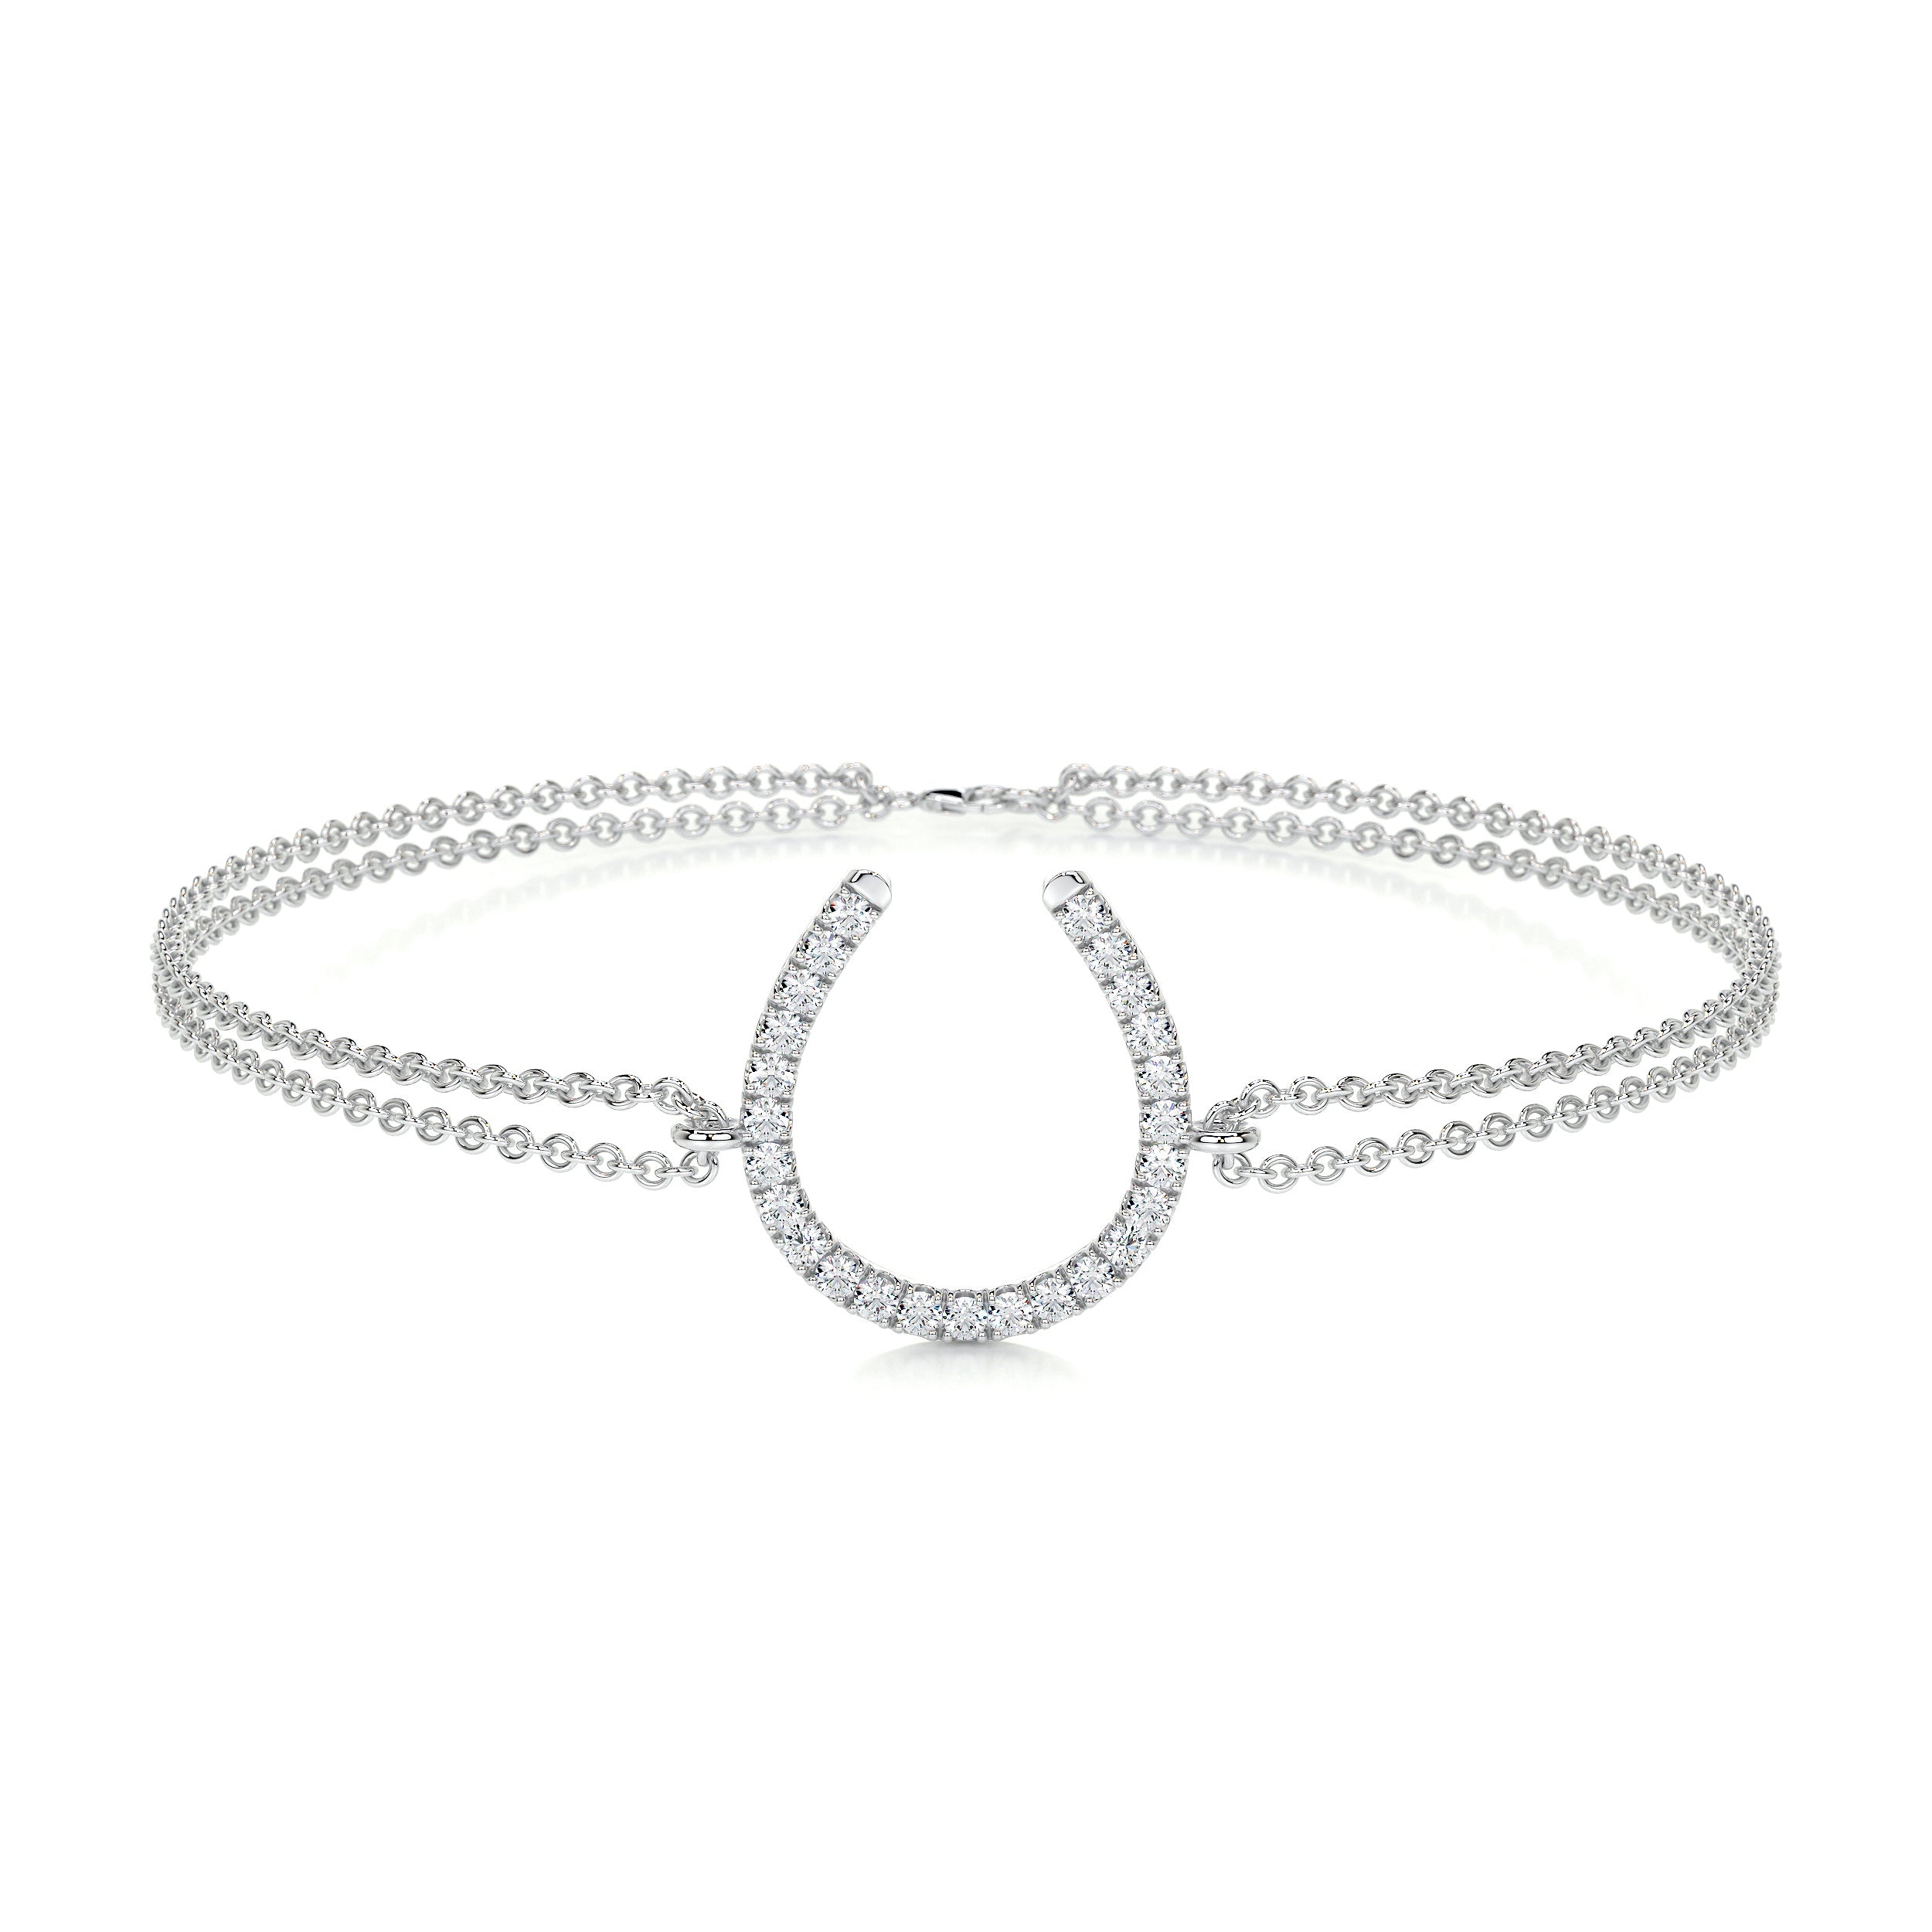 Horseshoe Diamonds Bracelet   (0.20 Carat) -18K White Gold